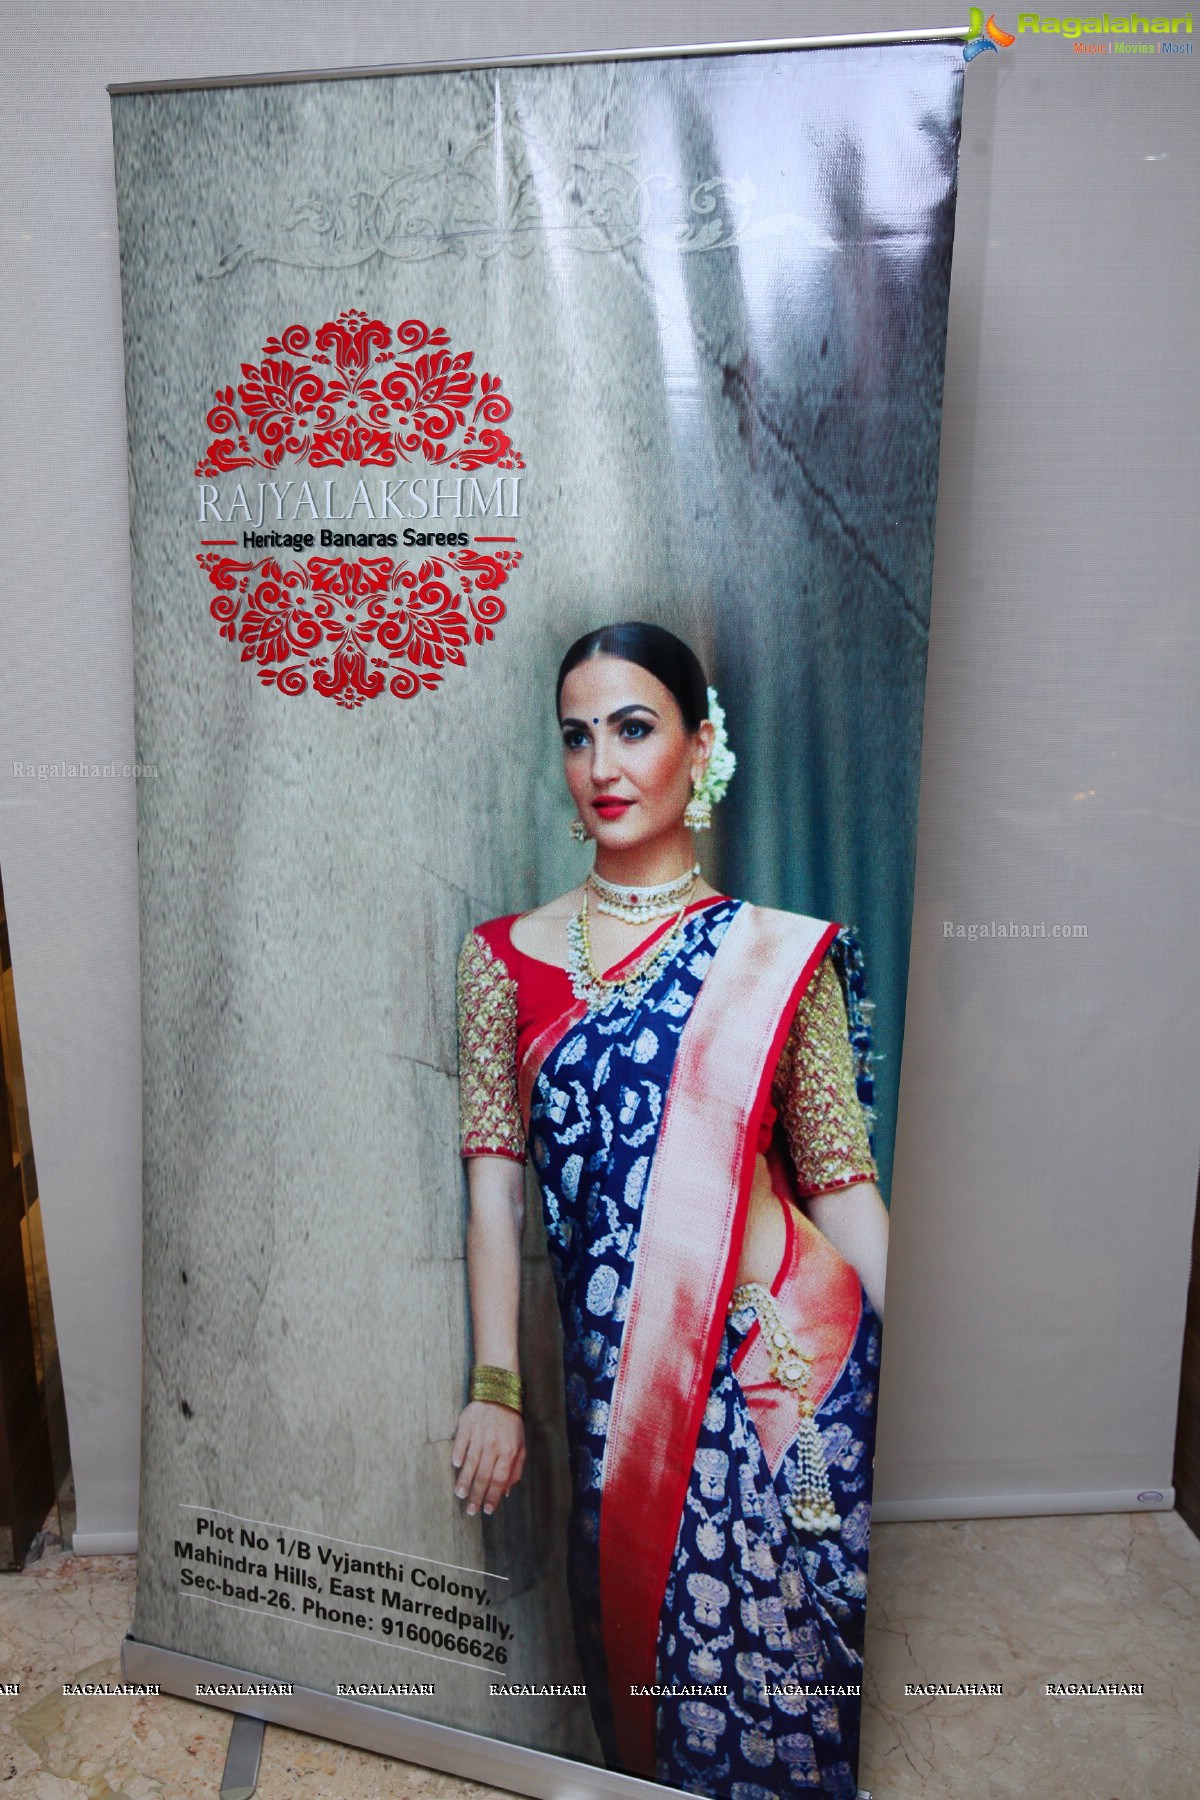 Grand Launch of Tales of Banaras - An Exhibition of Classic Banaras Sarees by Designer Rajyalakshmi Gubba